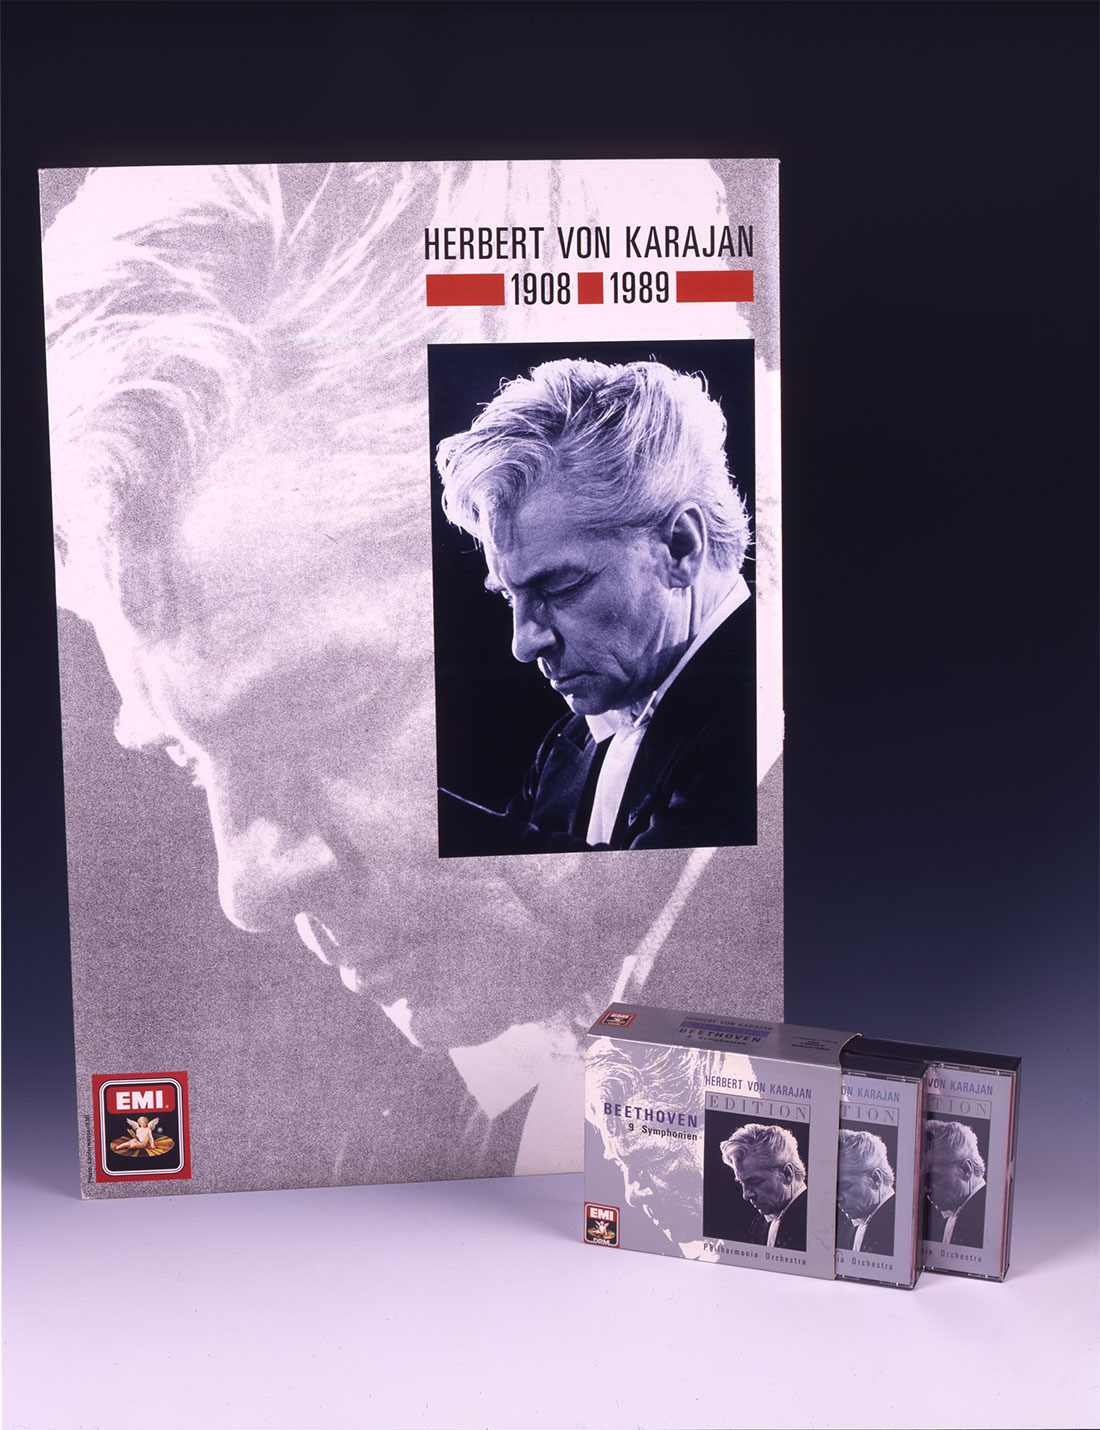 Cd design for Herbert von Karajan